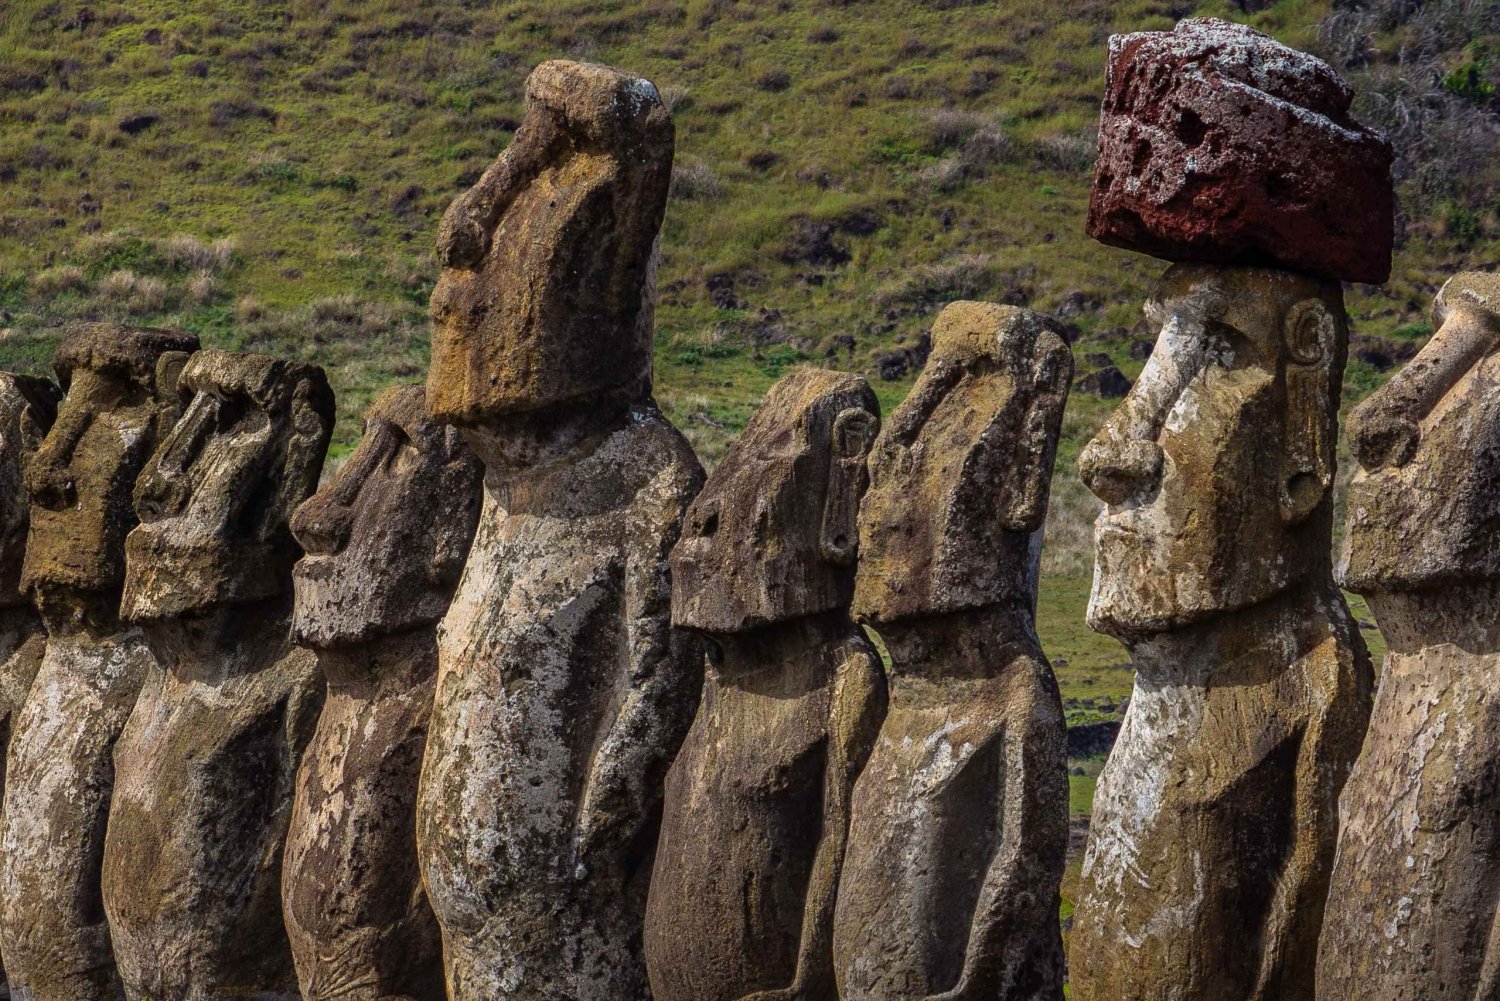 Intera giornata Moai e Mistery